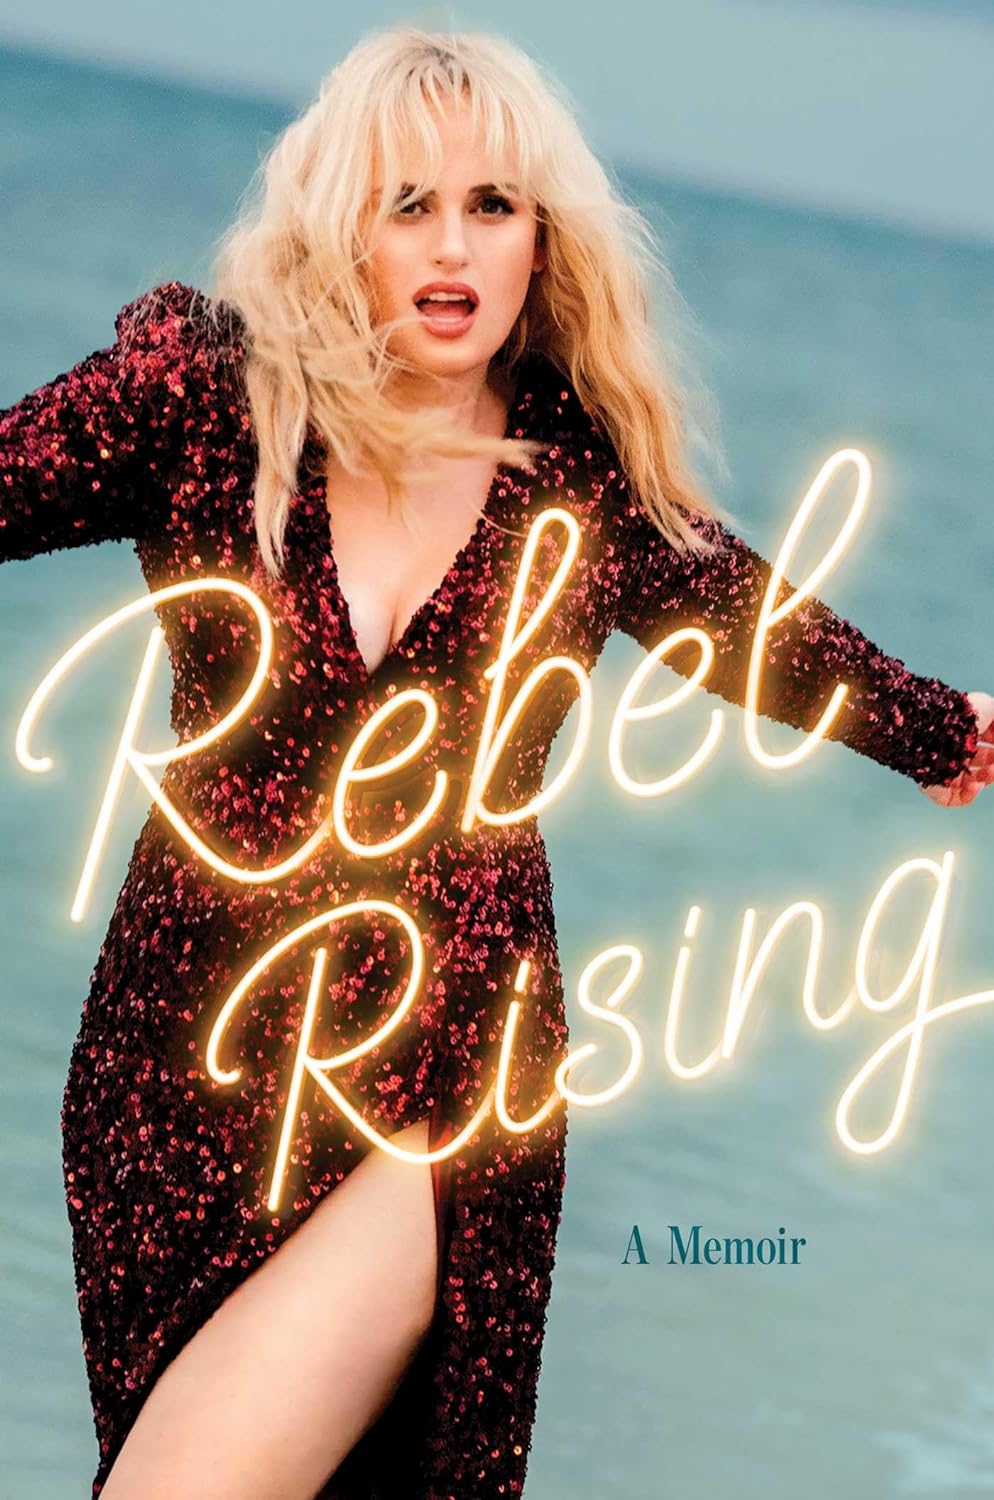 Image for "Rebel Rising"